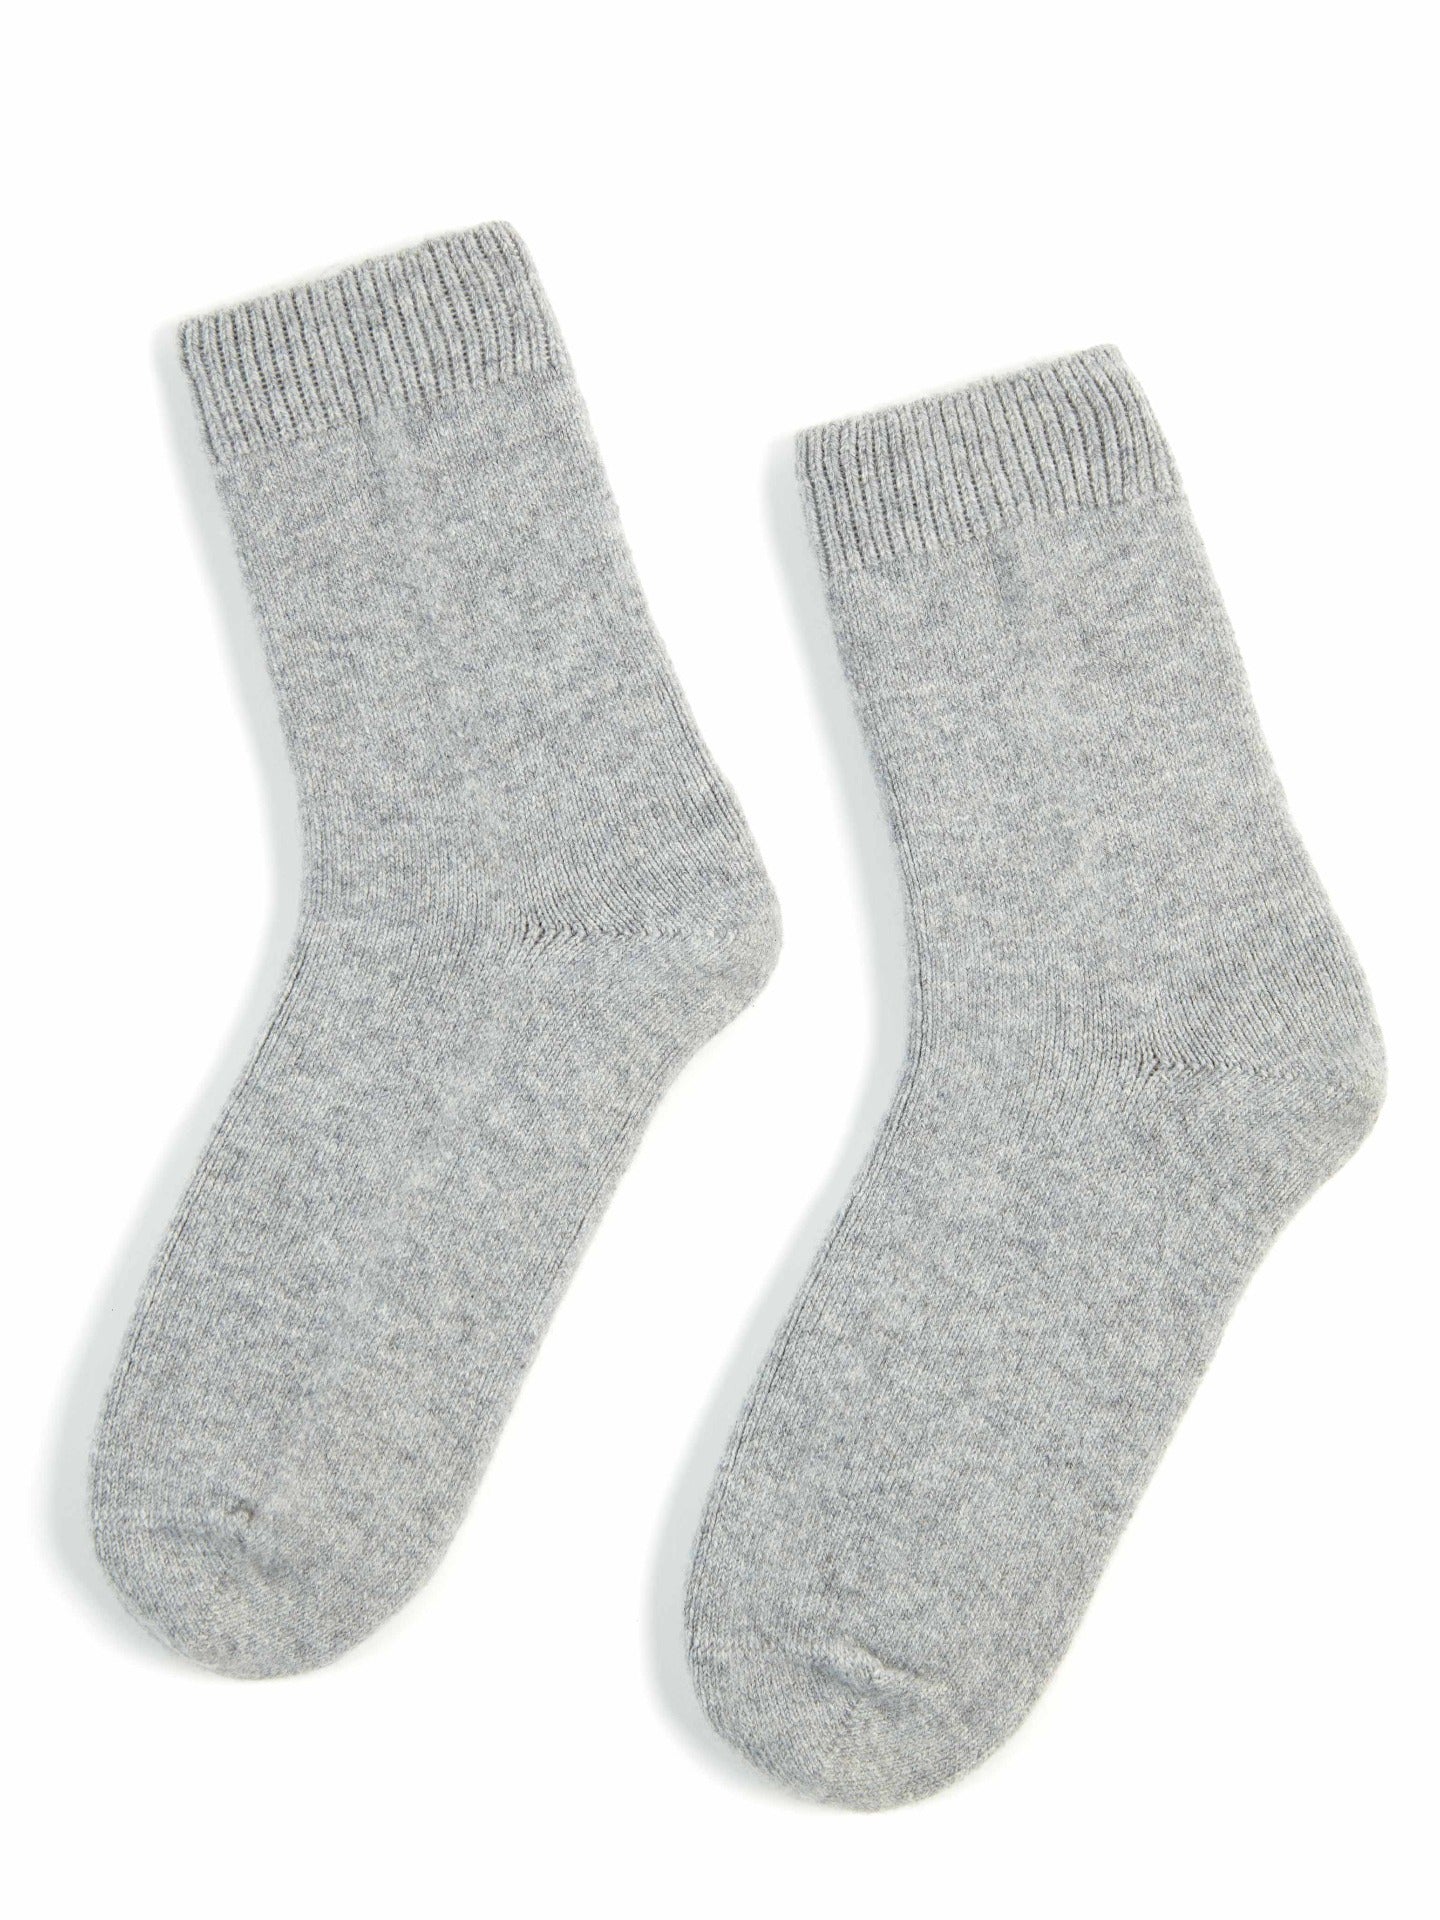 Unisex Cashmere Rib Knit Bed Socks Gray - Gobi Cashmere